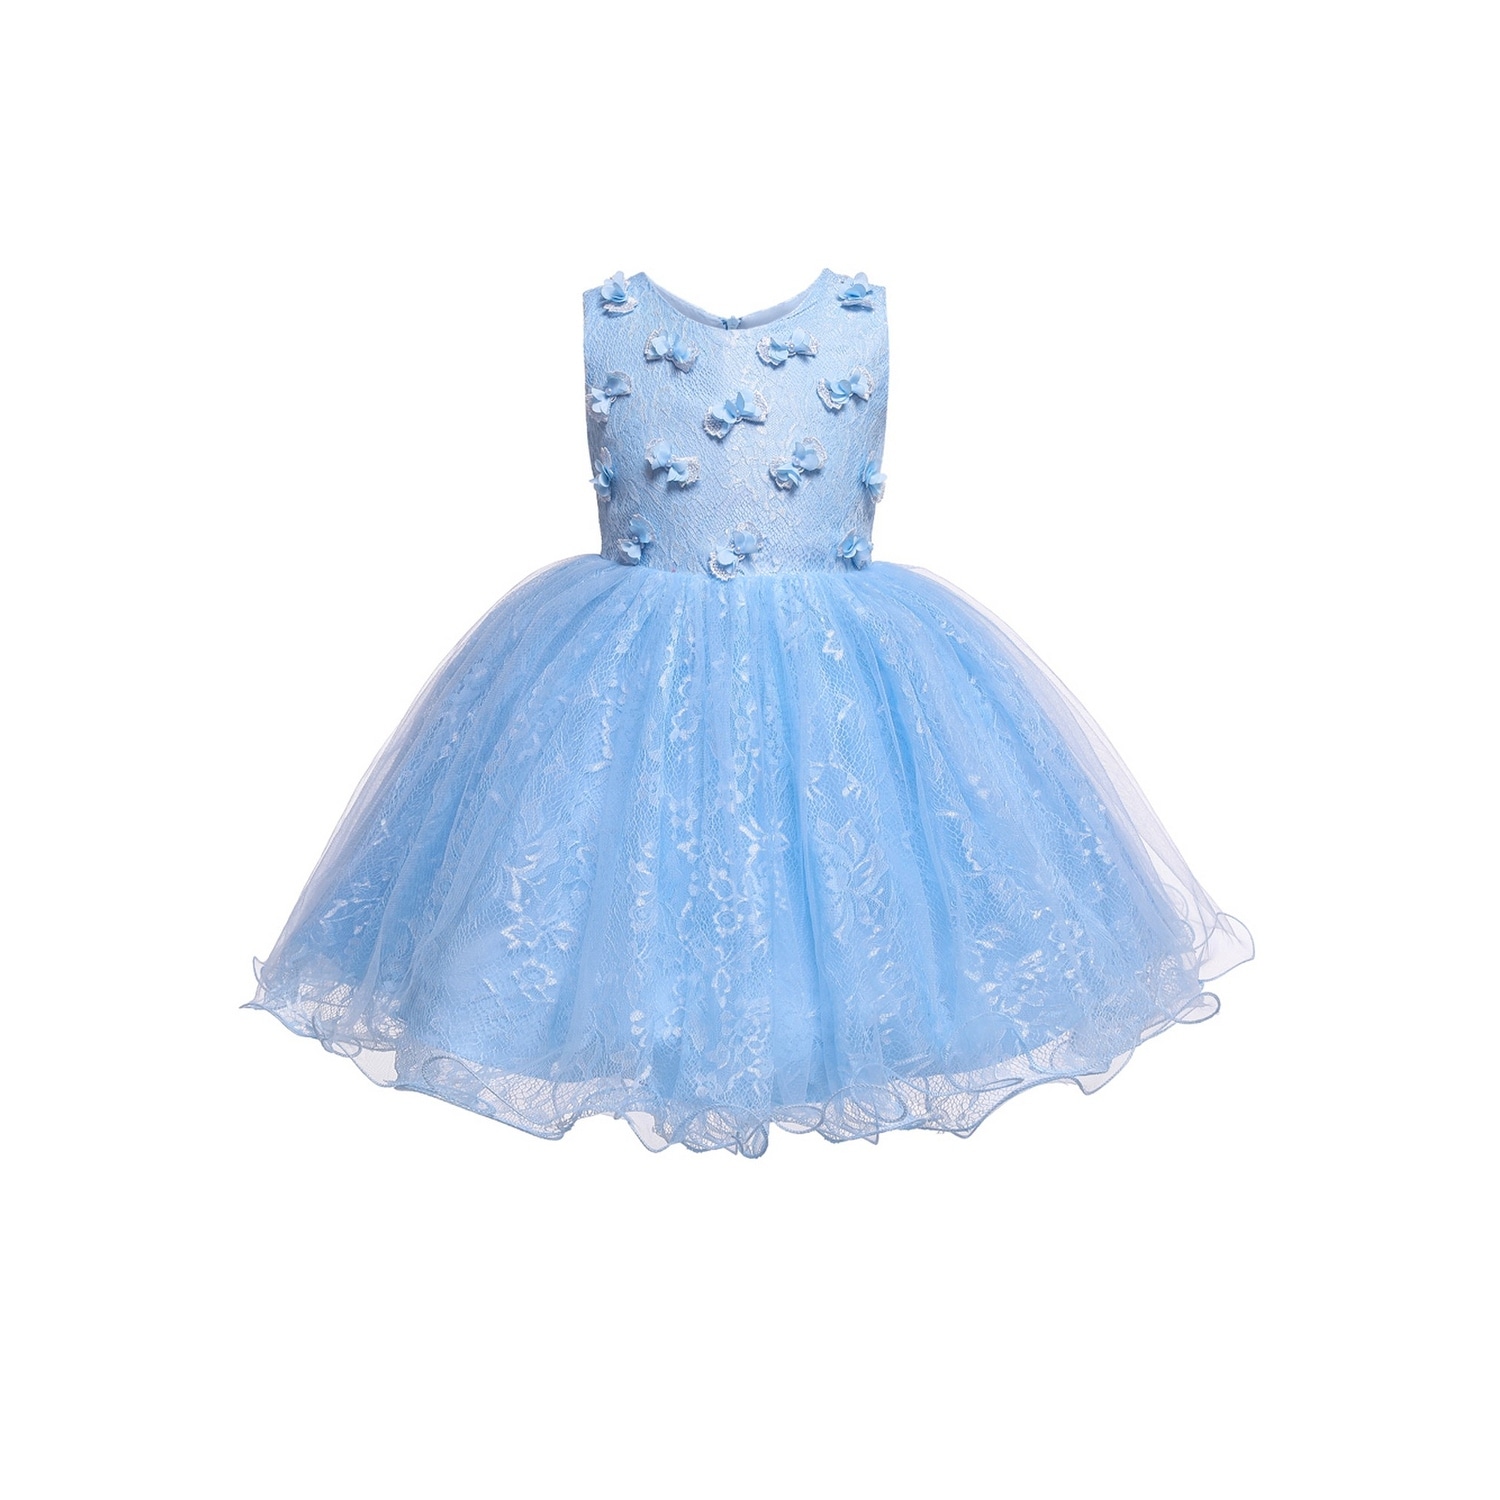 sky blue baby dress